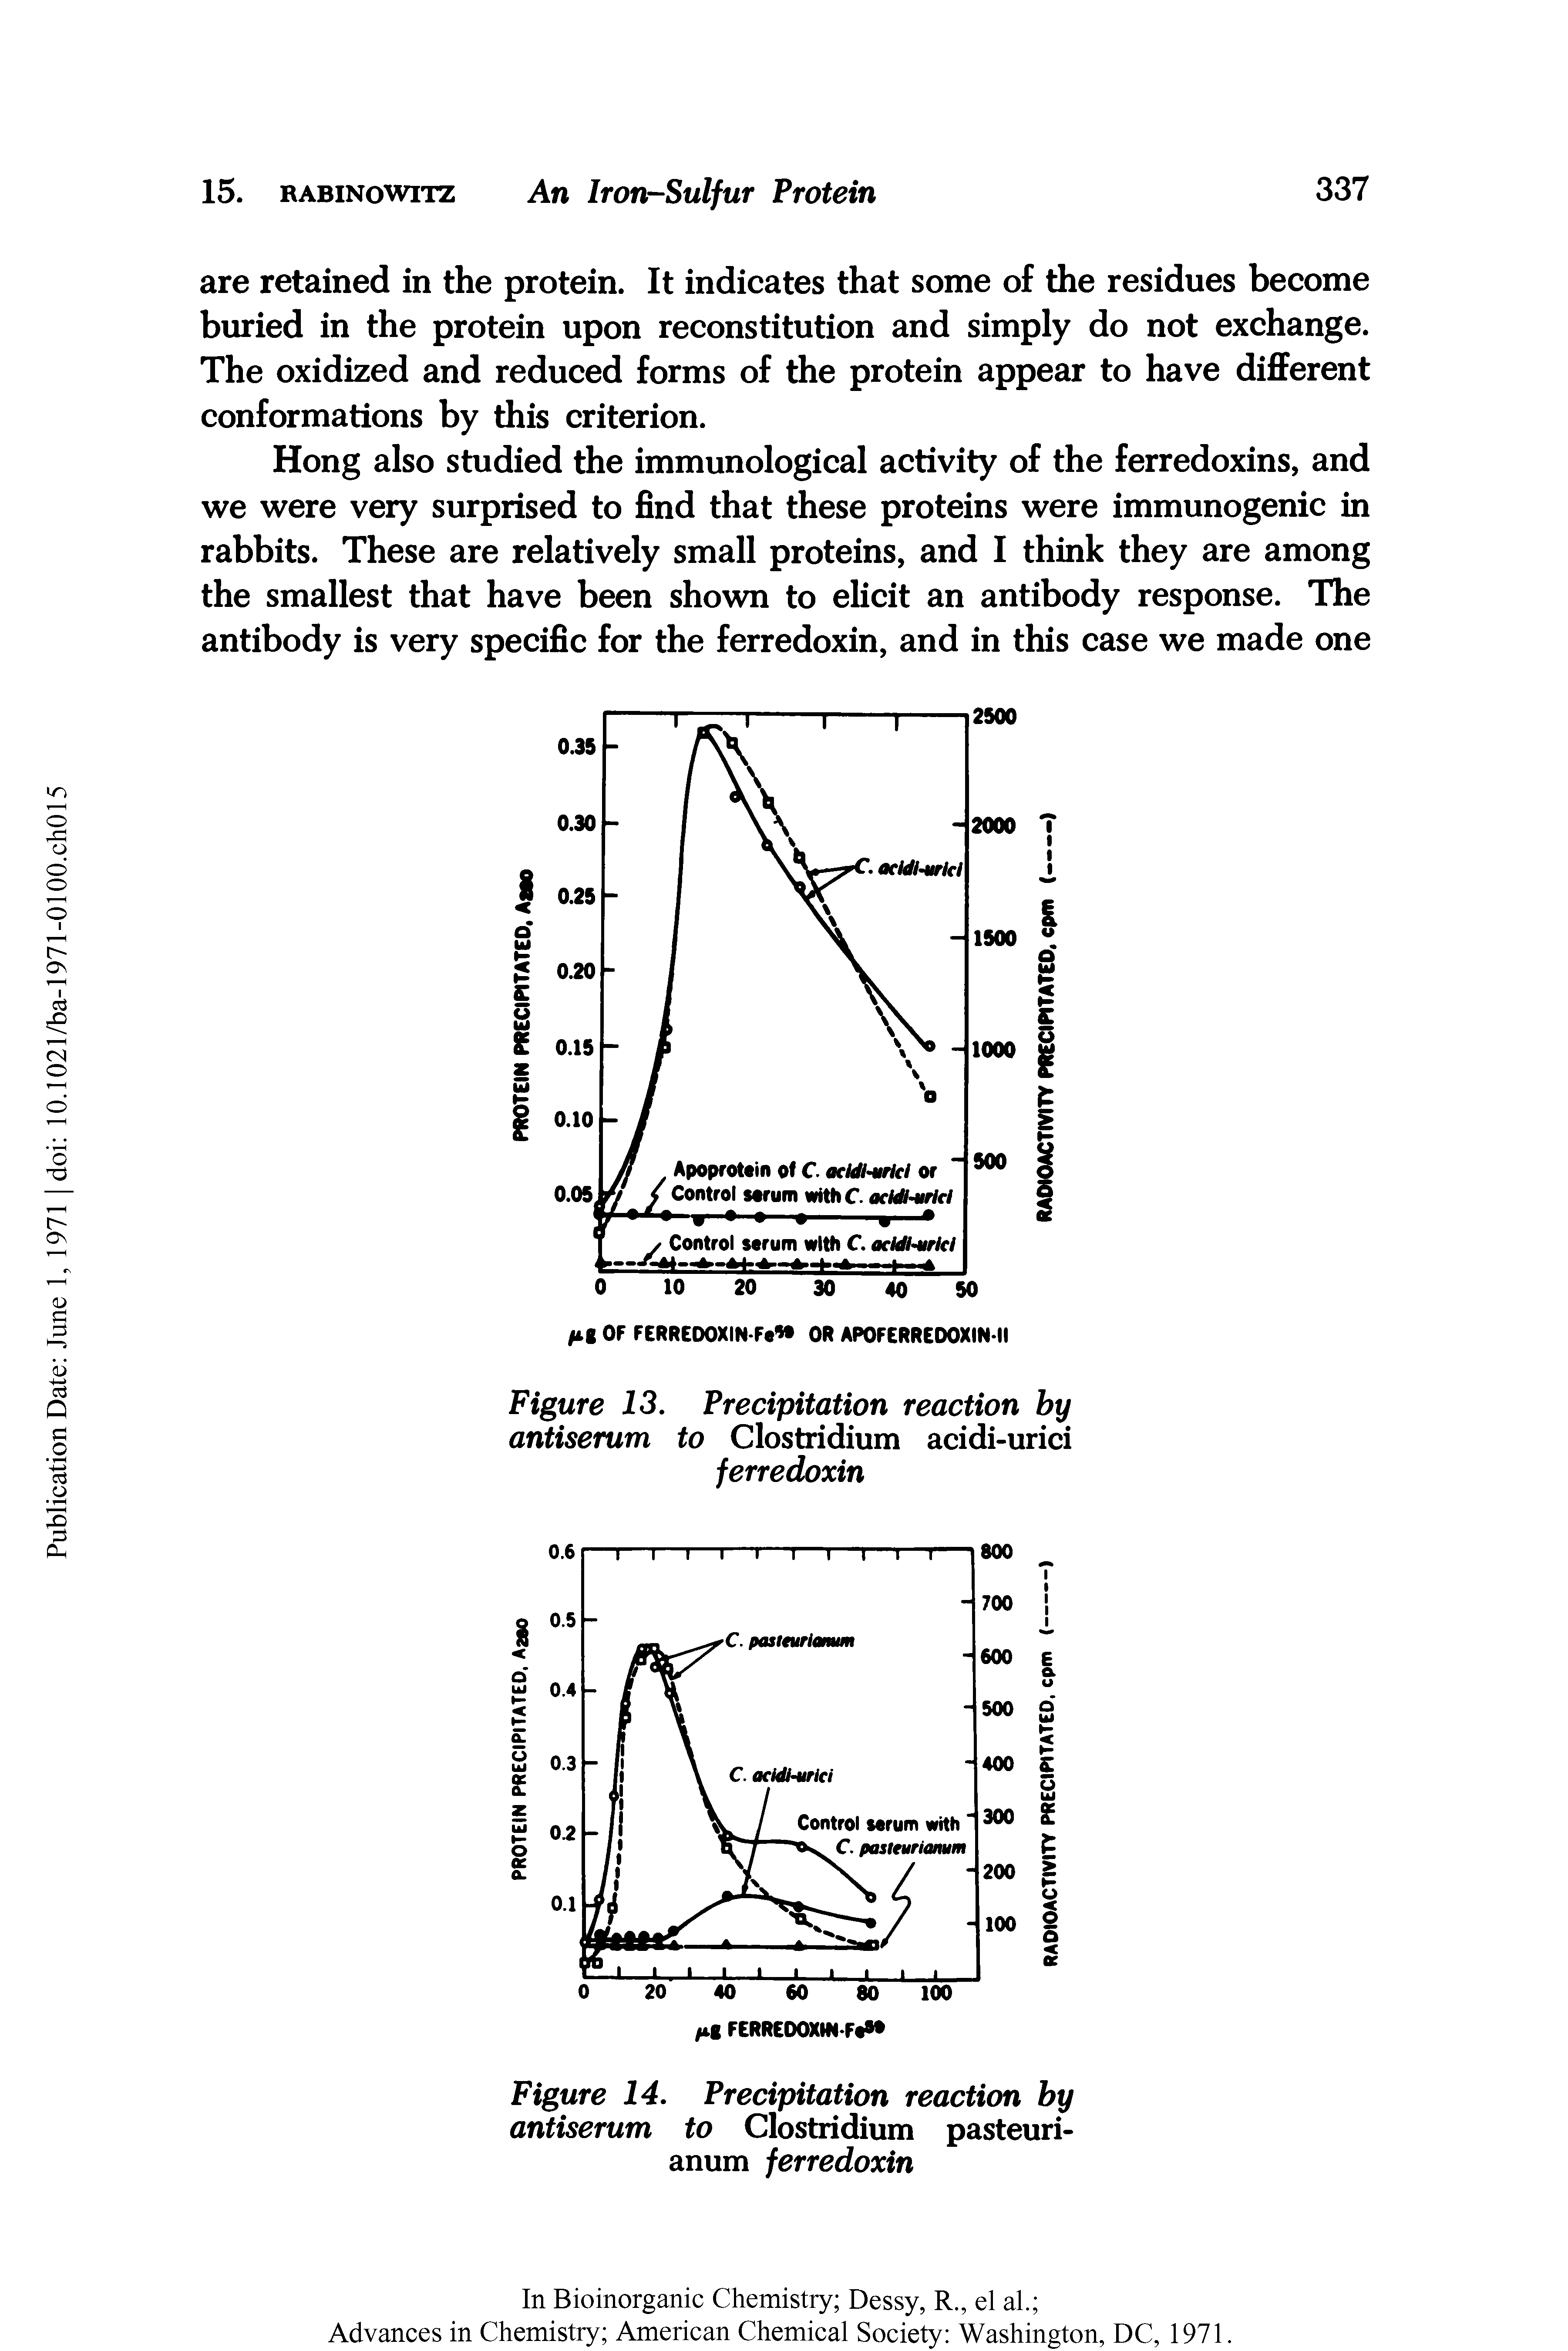 Figure 13. Precipitation reaction by antiserum to Clostridium acidi-urici ferredoxin...